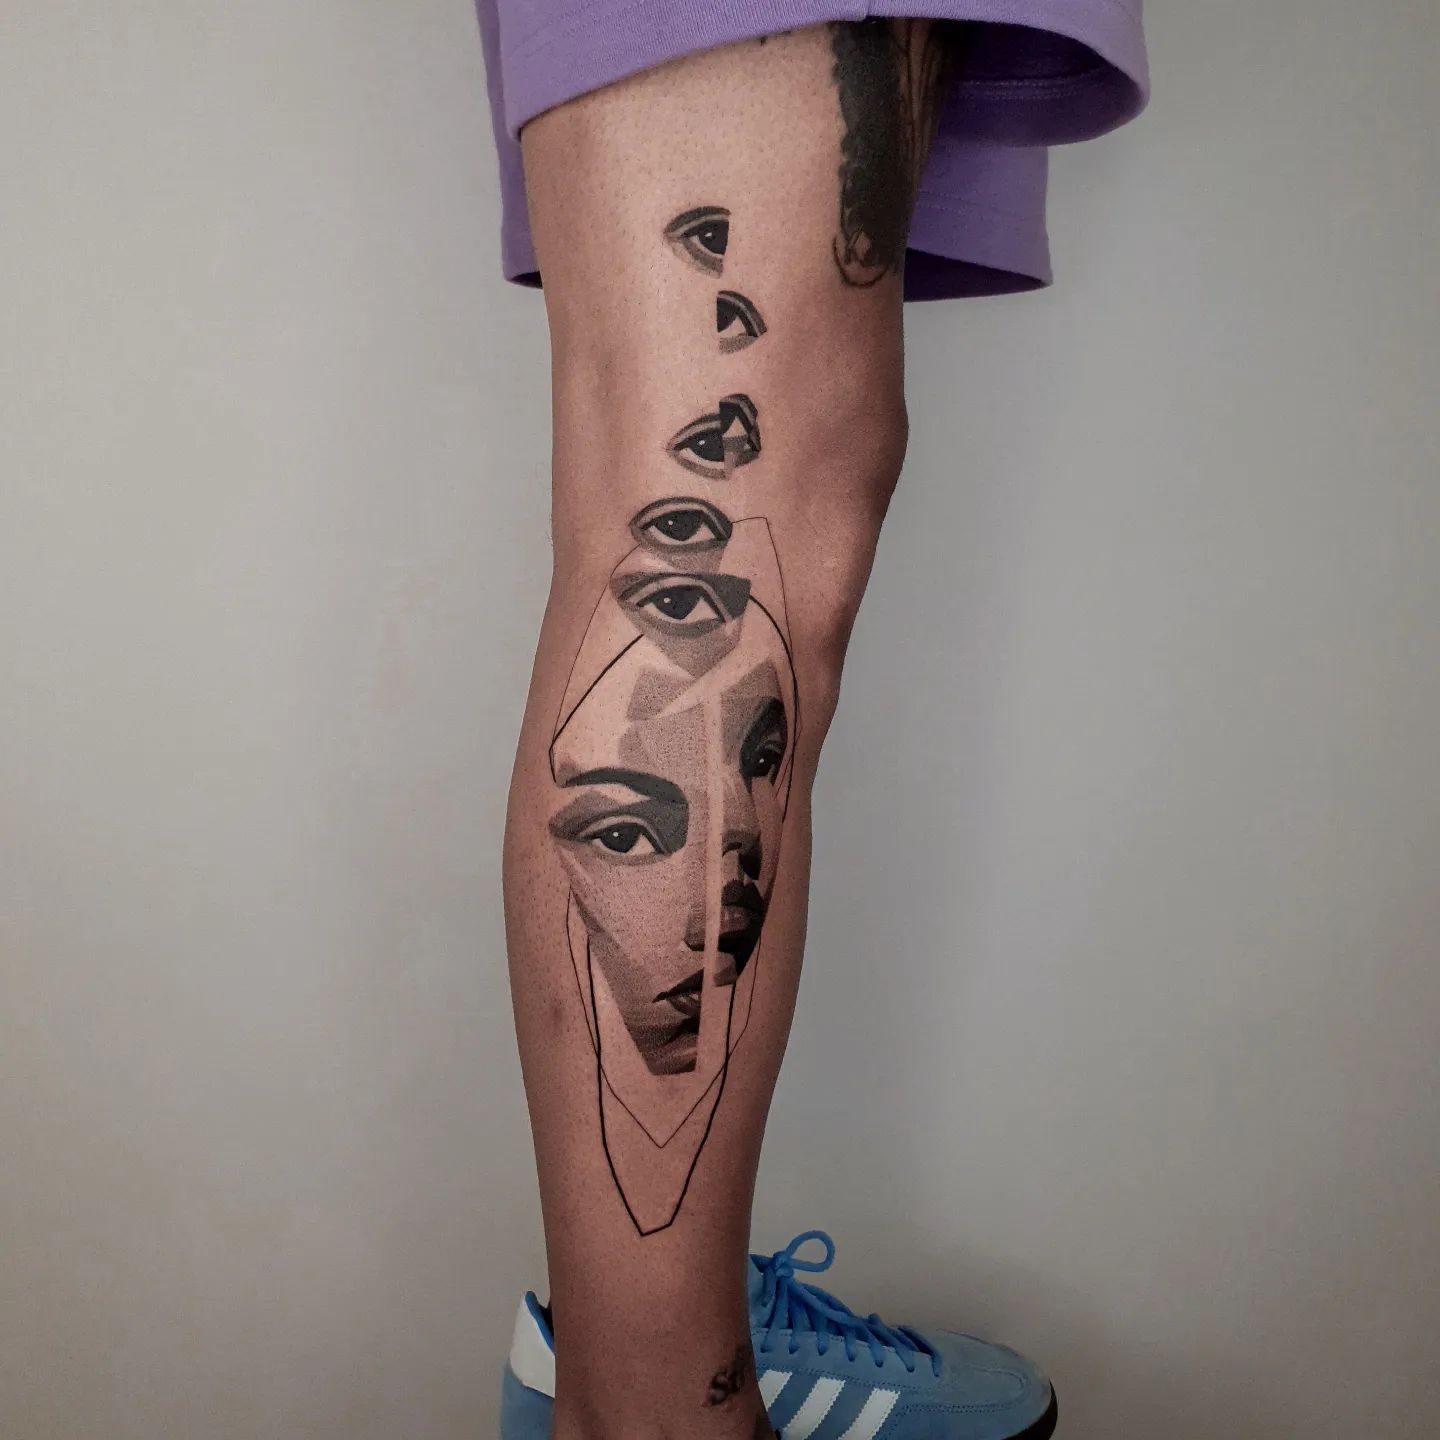 Portrait tattoo design on leg by mikekyrtatas